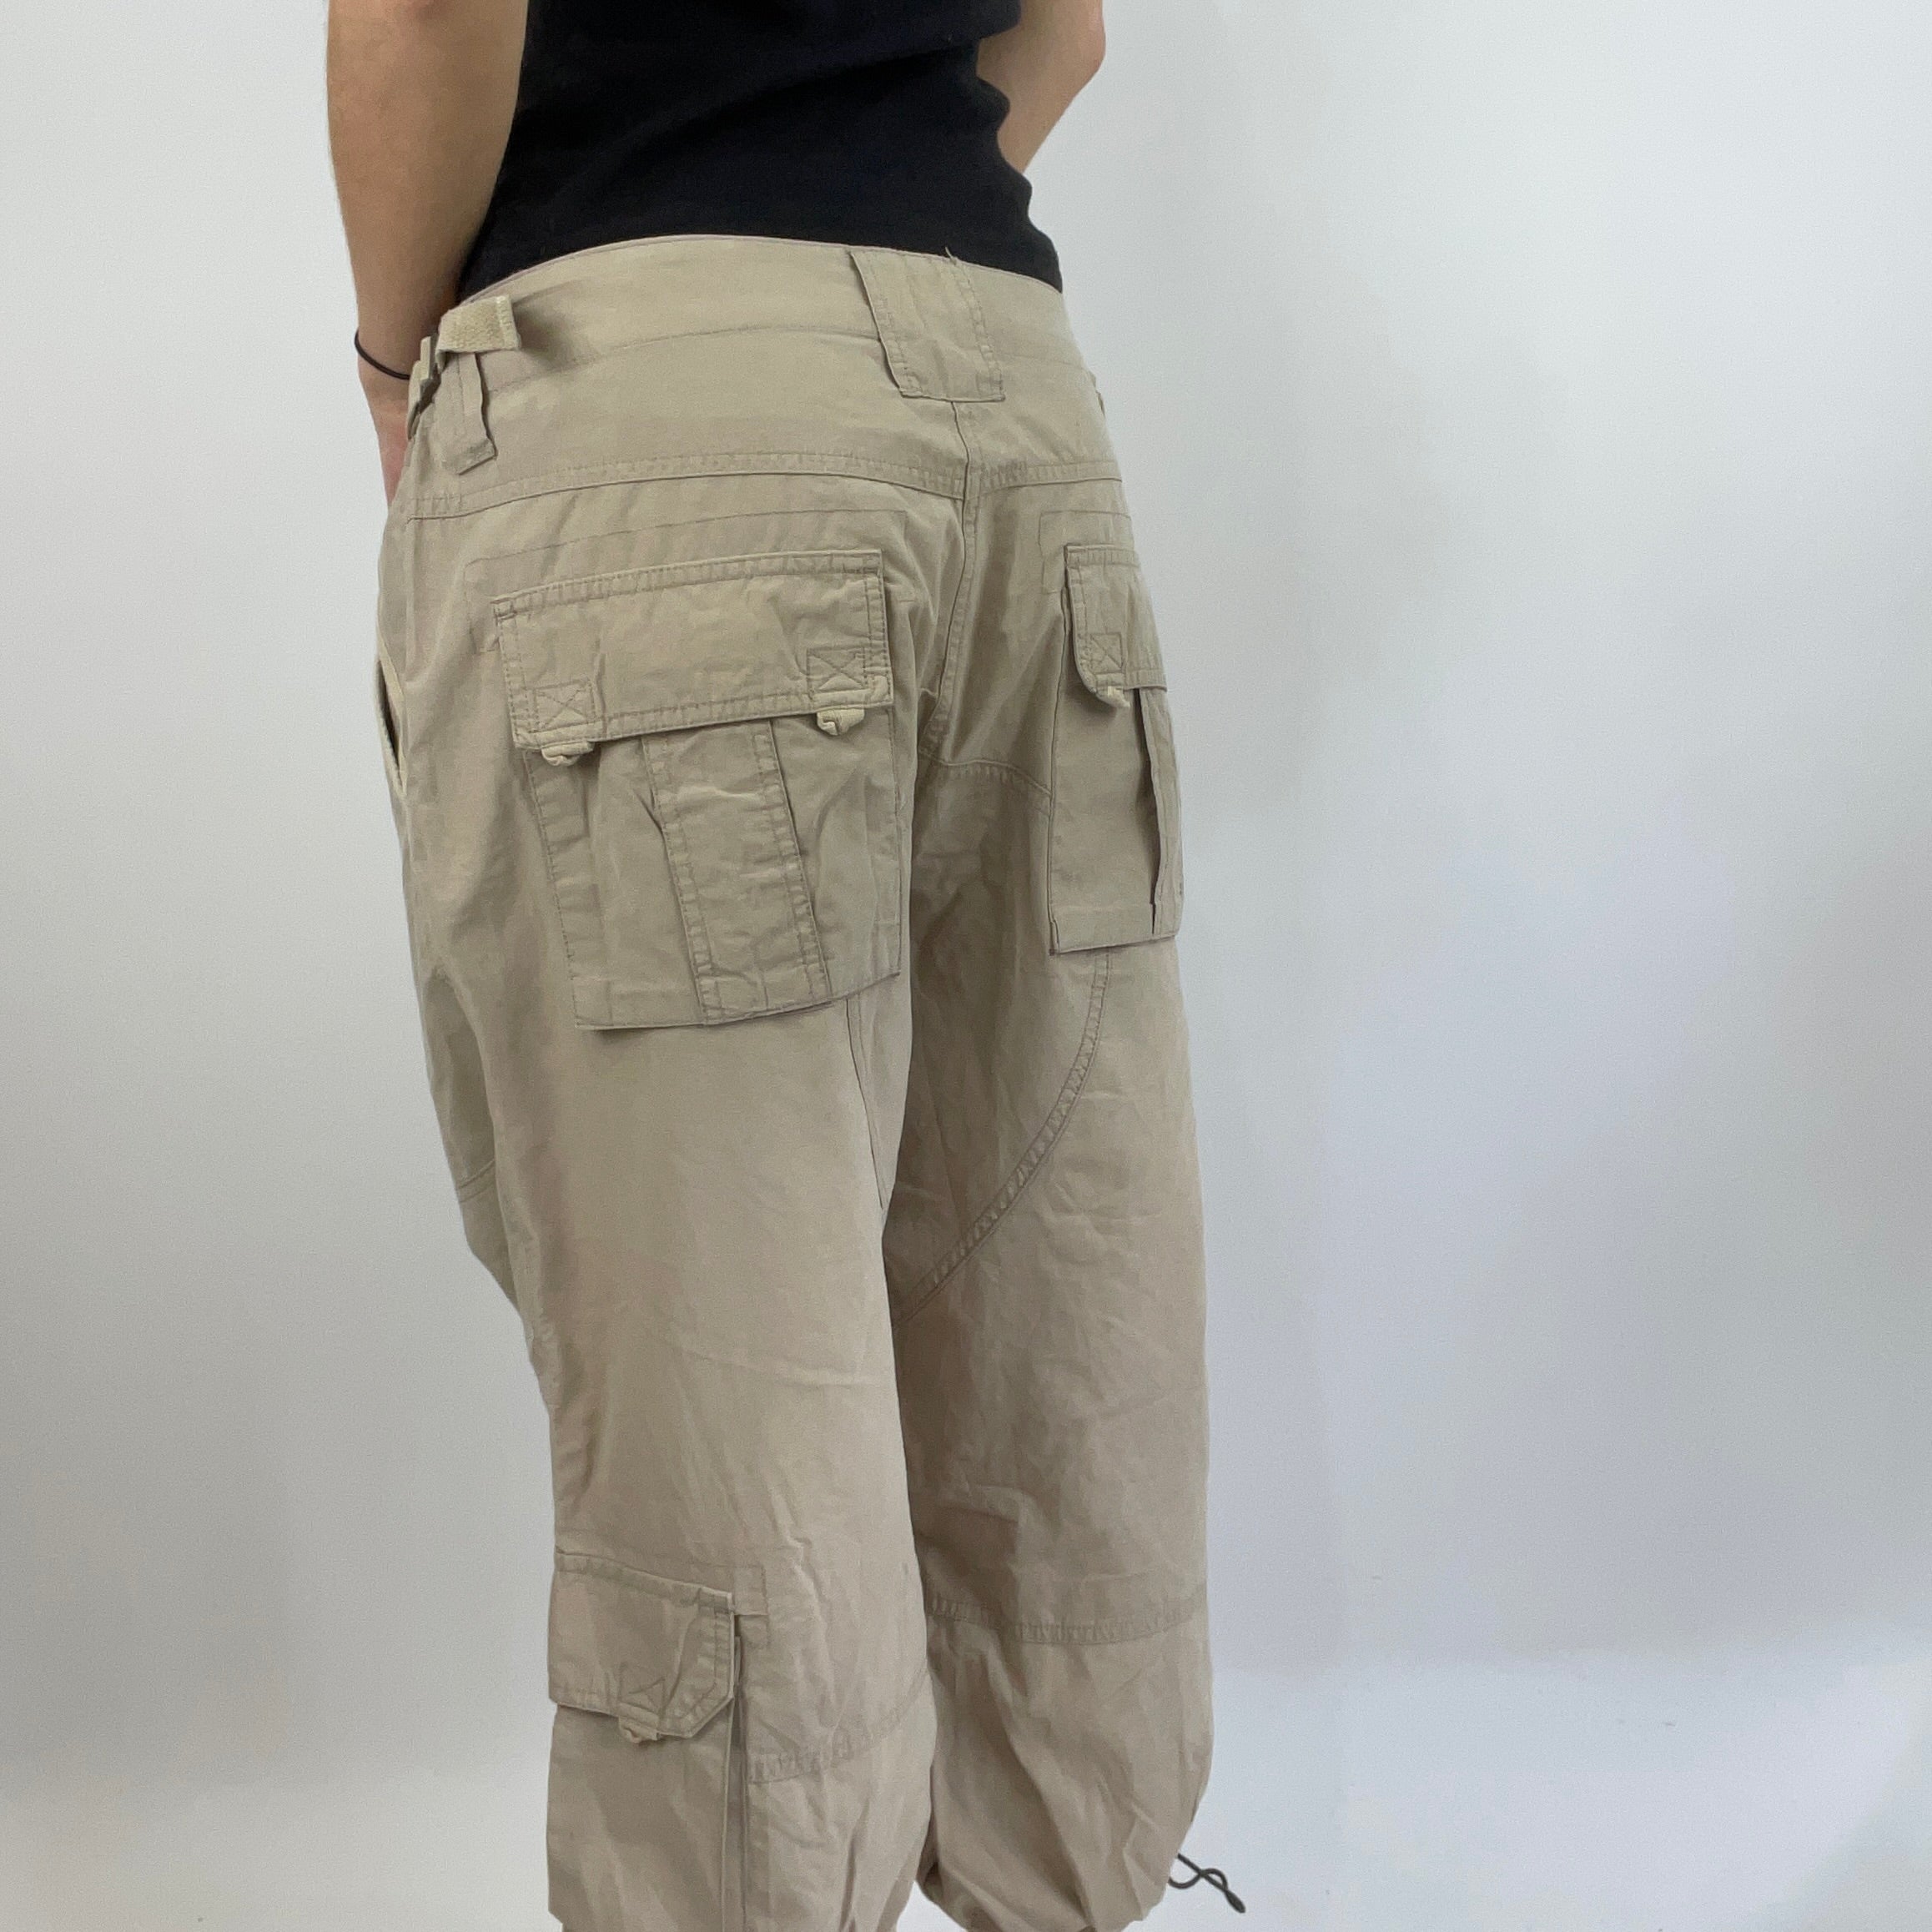 Cropped Trousers  Capri  34 Length Trousers  bonprix